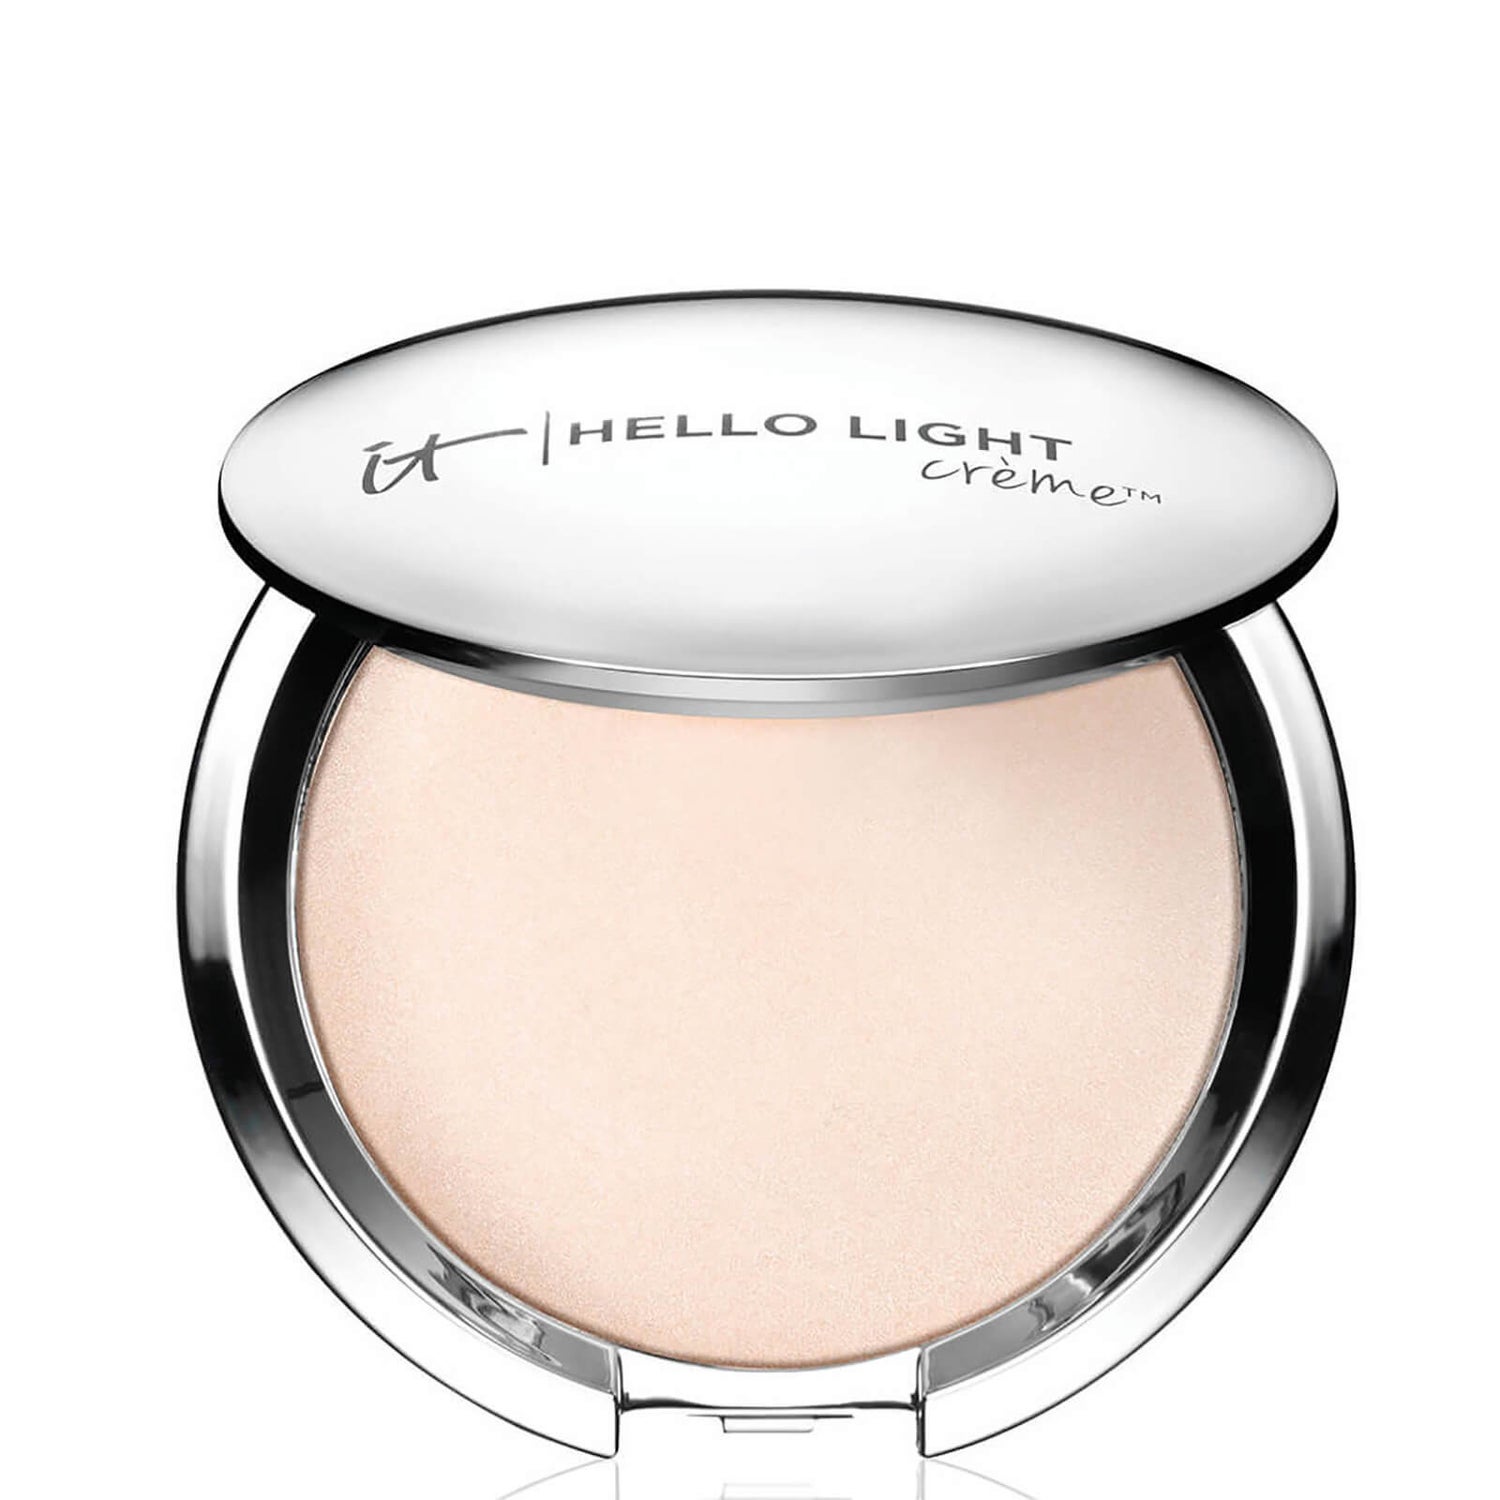 IT Cosmetics Hello Light Crème - Radiance 6.53g